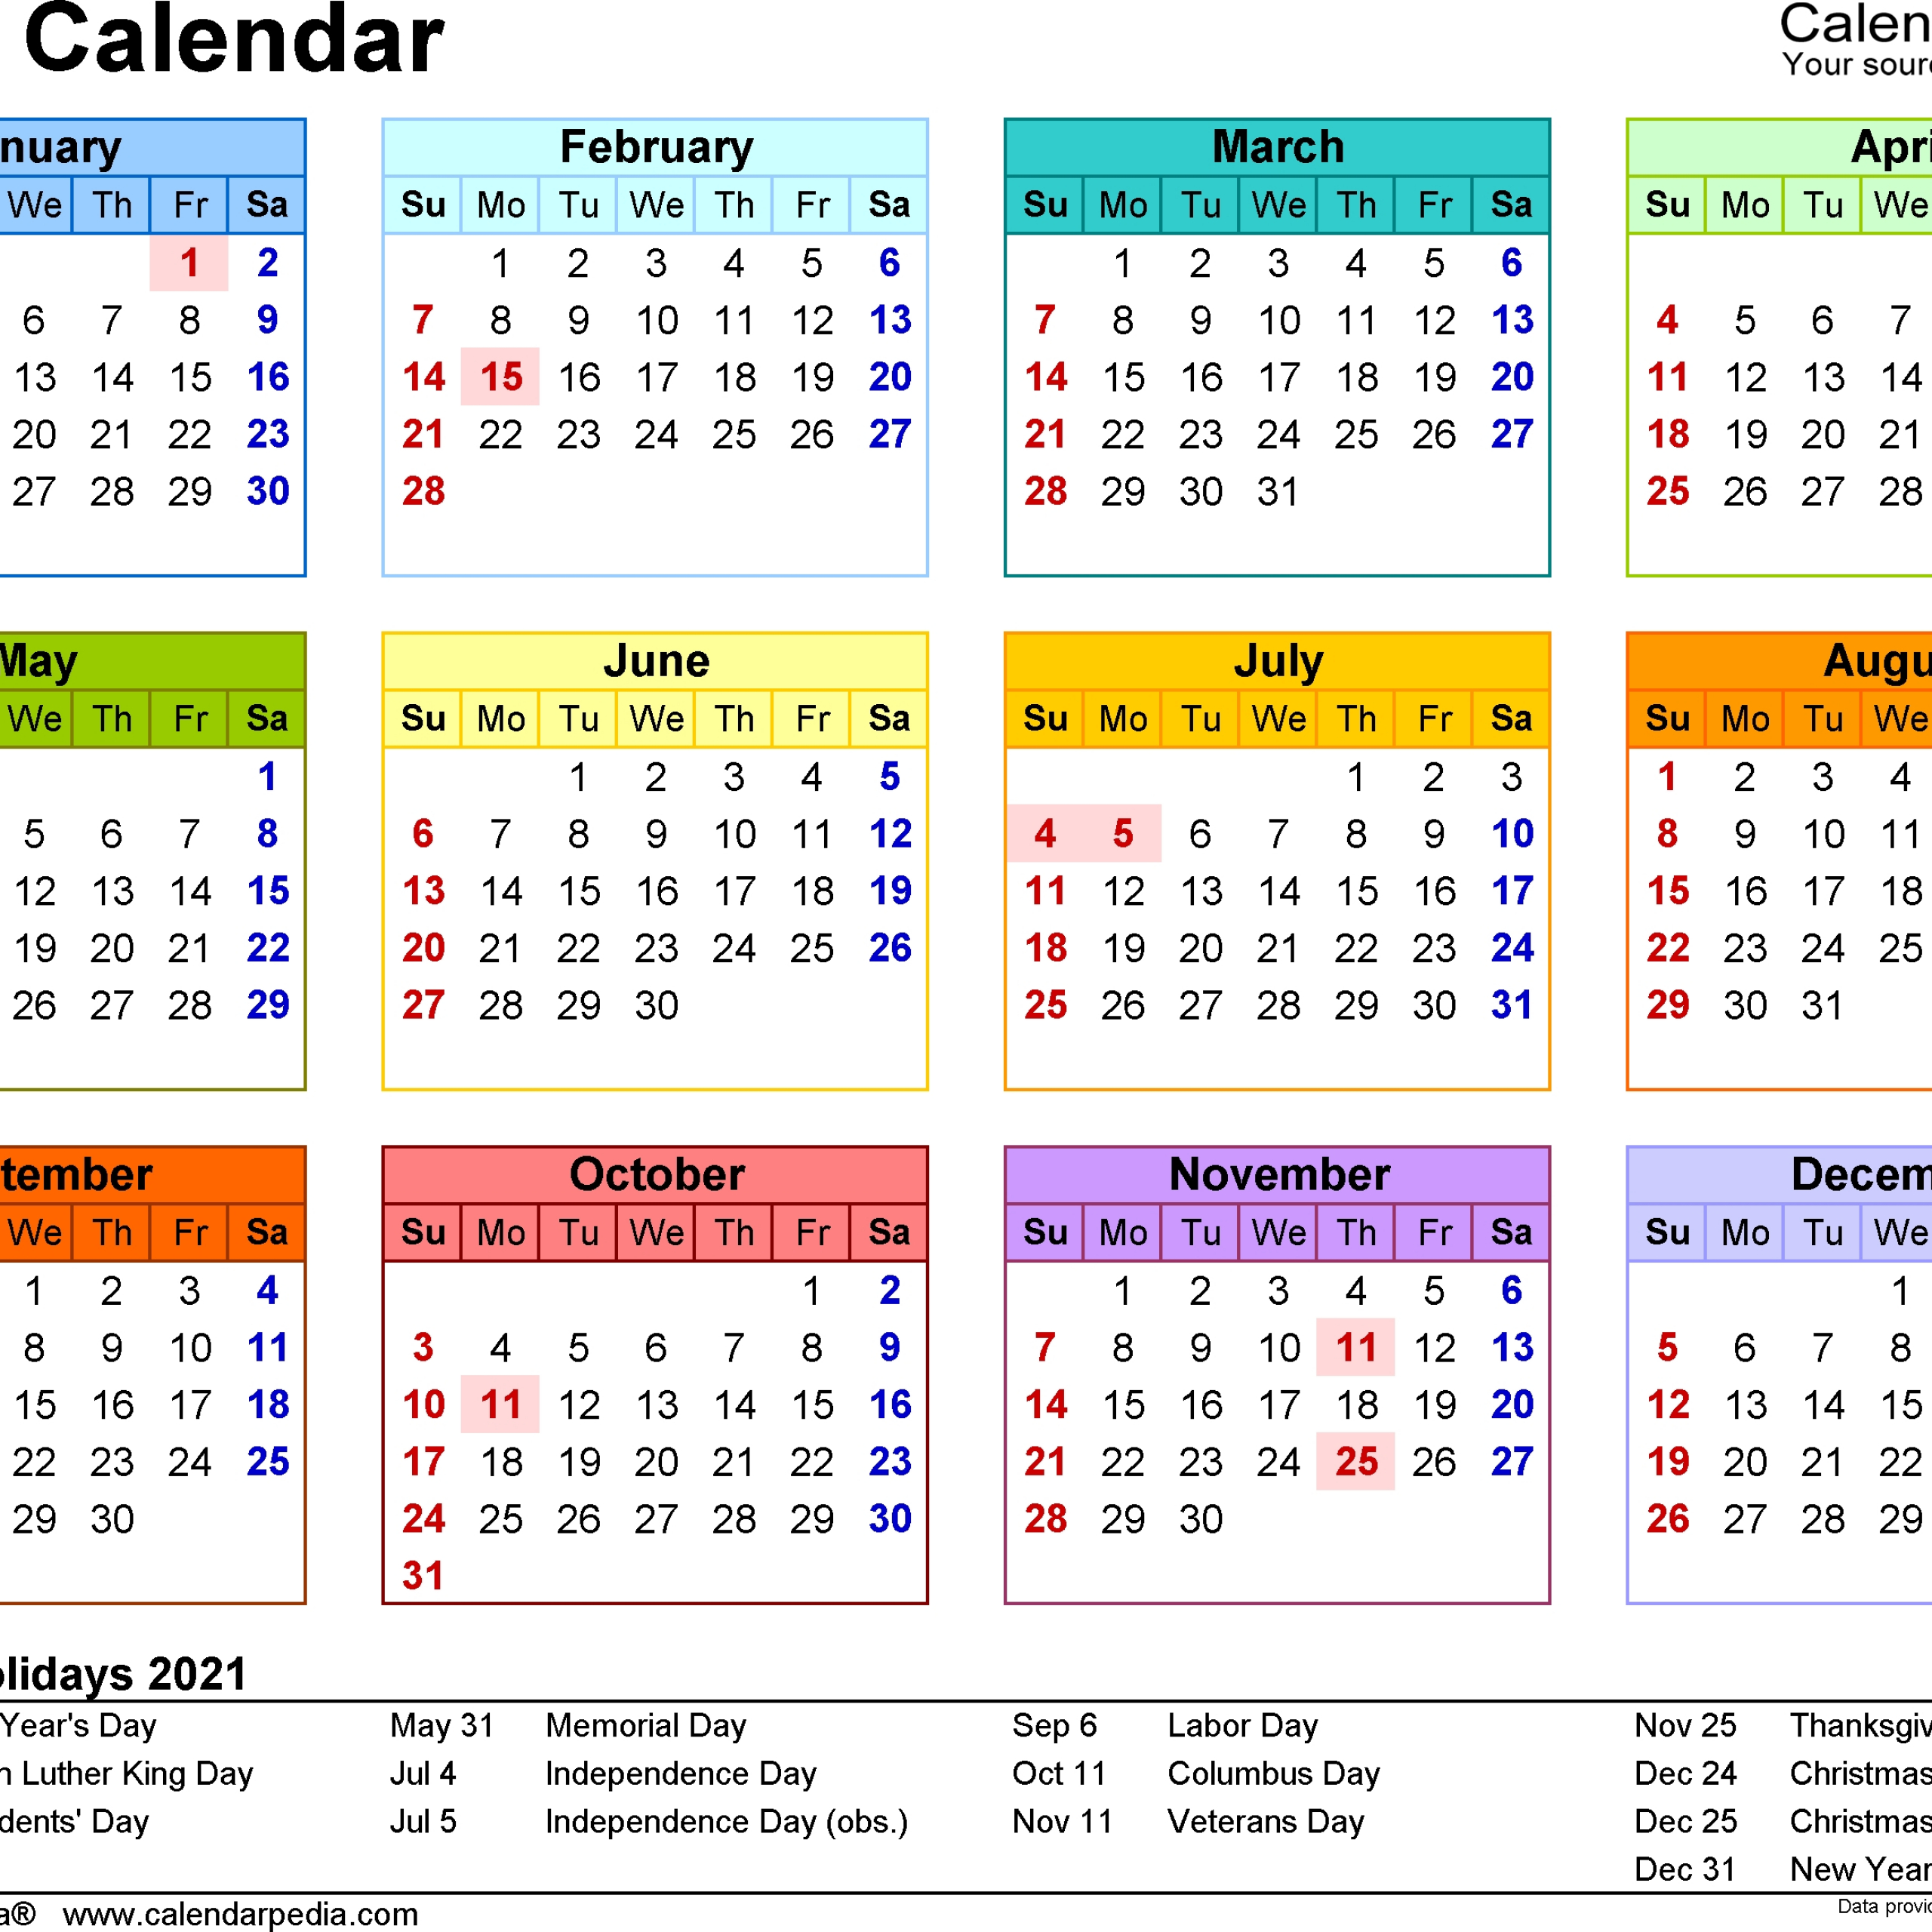 2021 Calendar Template Free | Excel Calendar, Calendar-Excel Vacation Schedule 2021